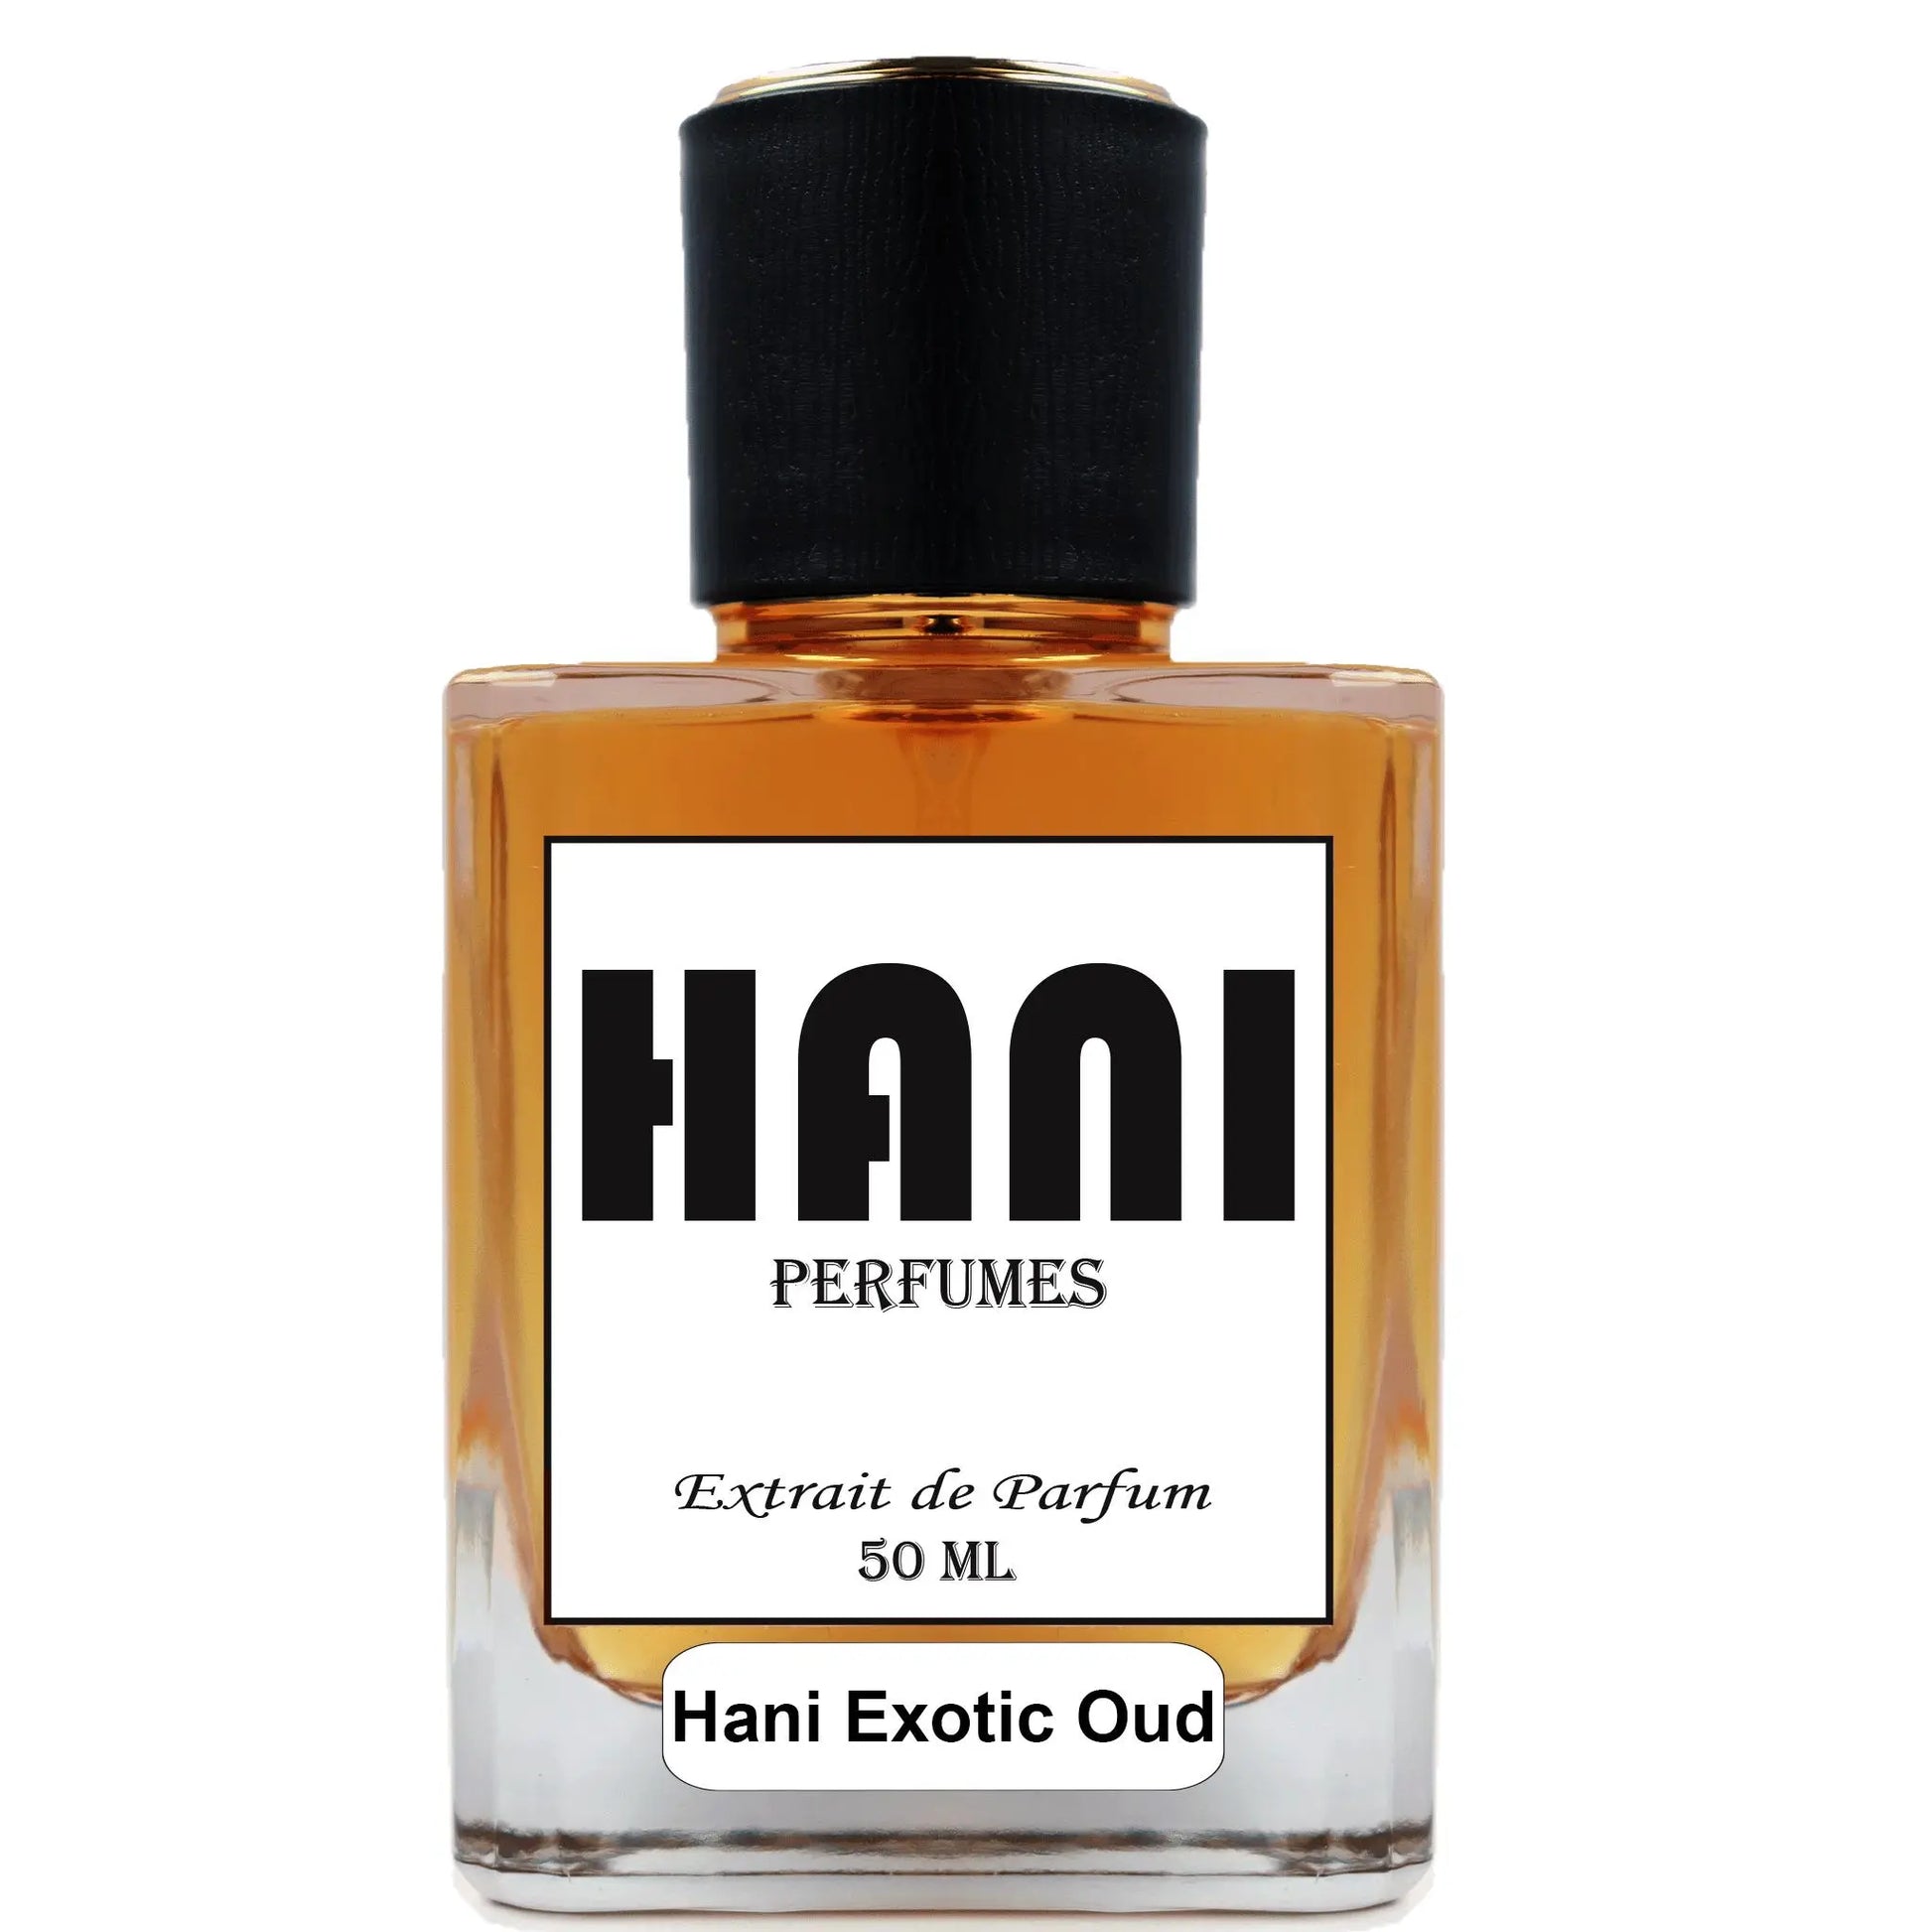 Hani Exotic Oud: Der Duftzwilling für Tom Ford's Oud Wood Hani-Exotic-Oud-Herren-Parfumduftzwilling-parfum-dupe-zwilling-75557163